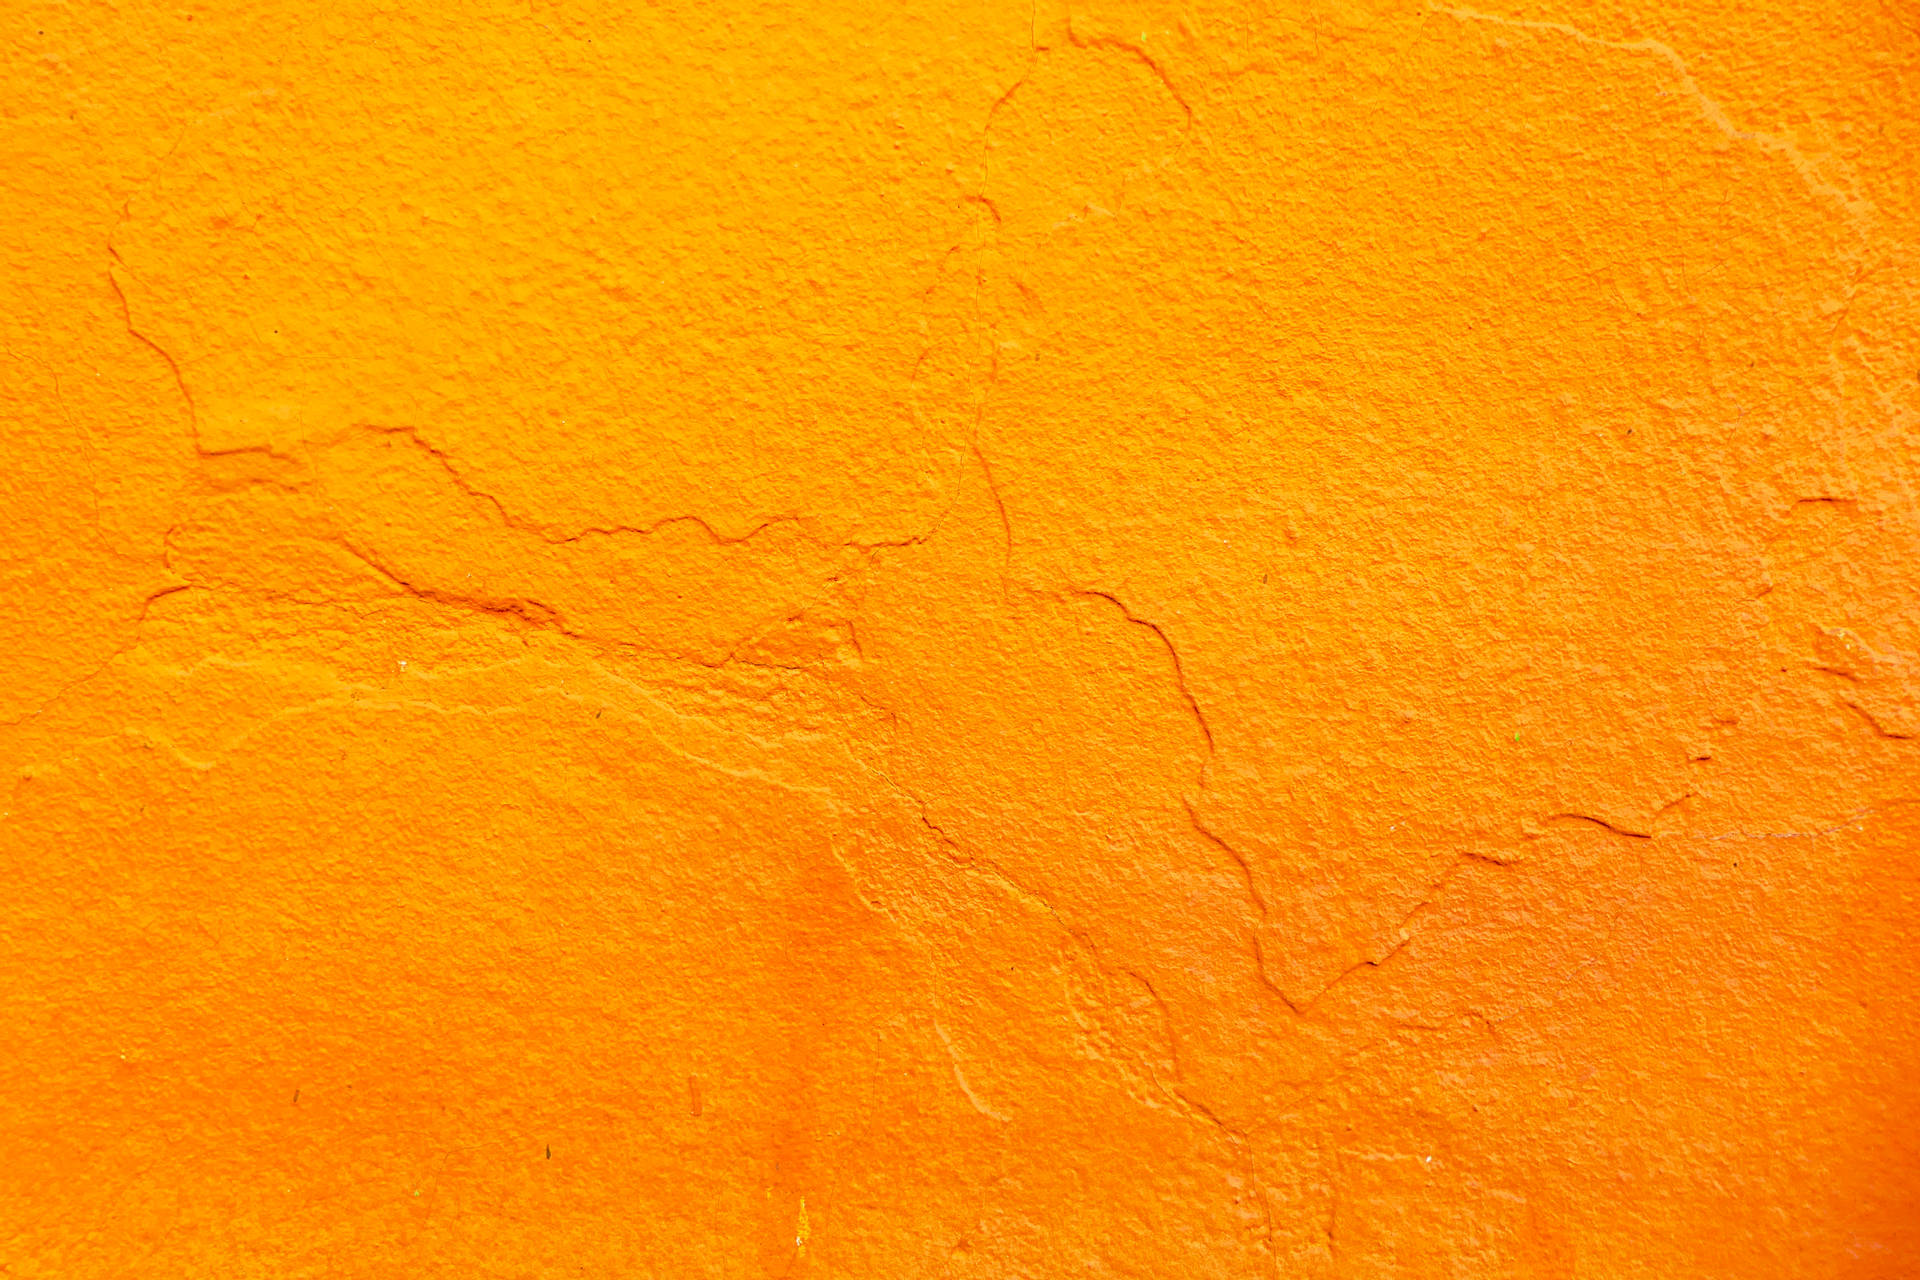 4797X3198 Orange Wallpaper and Background